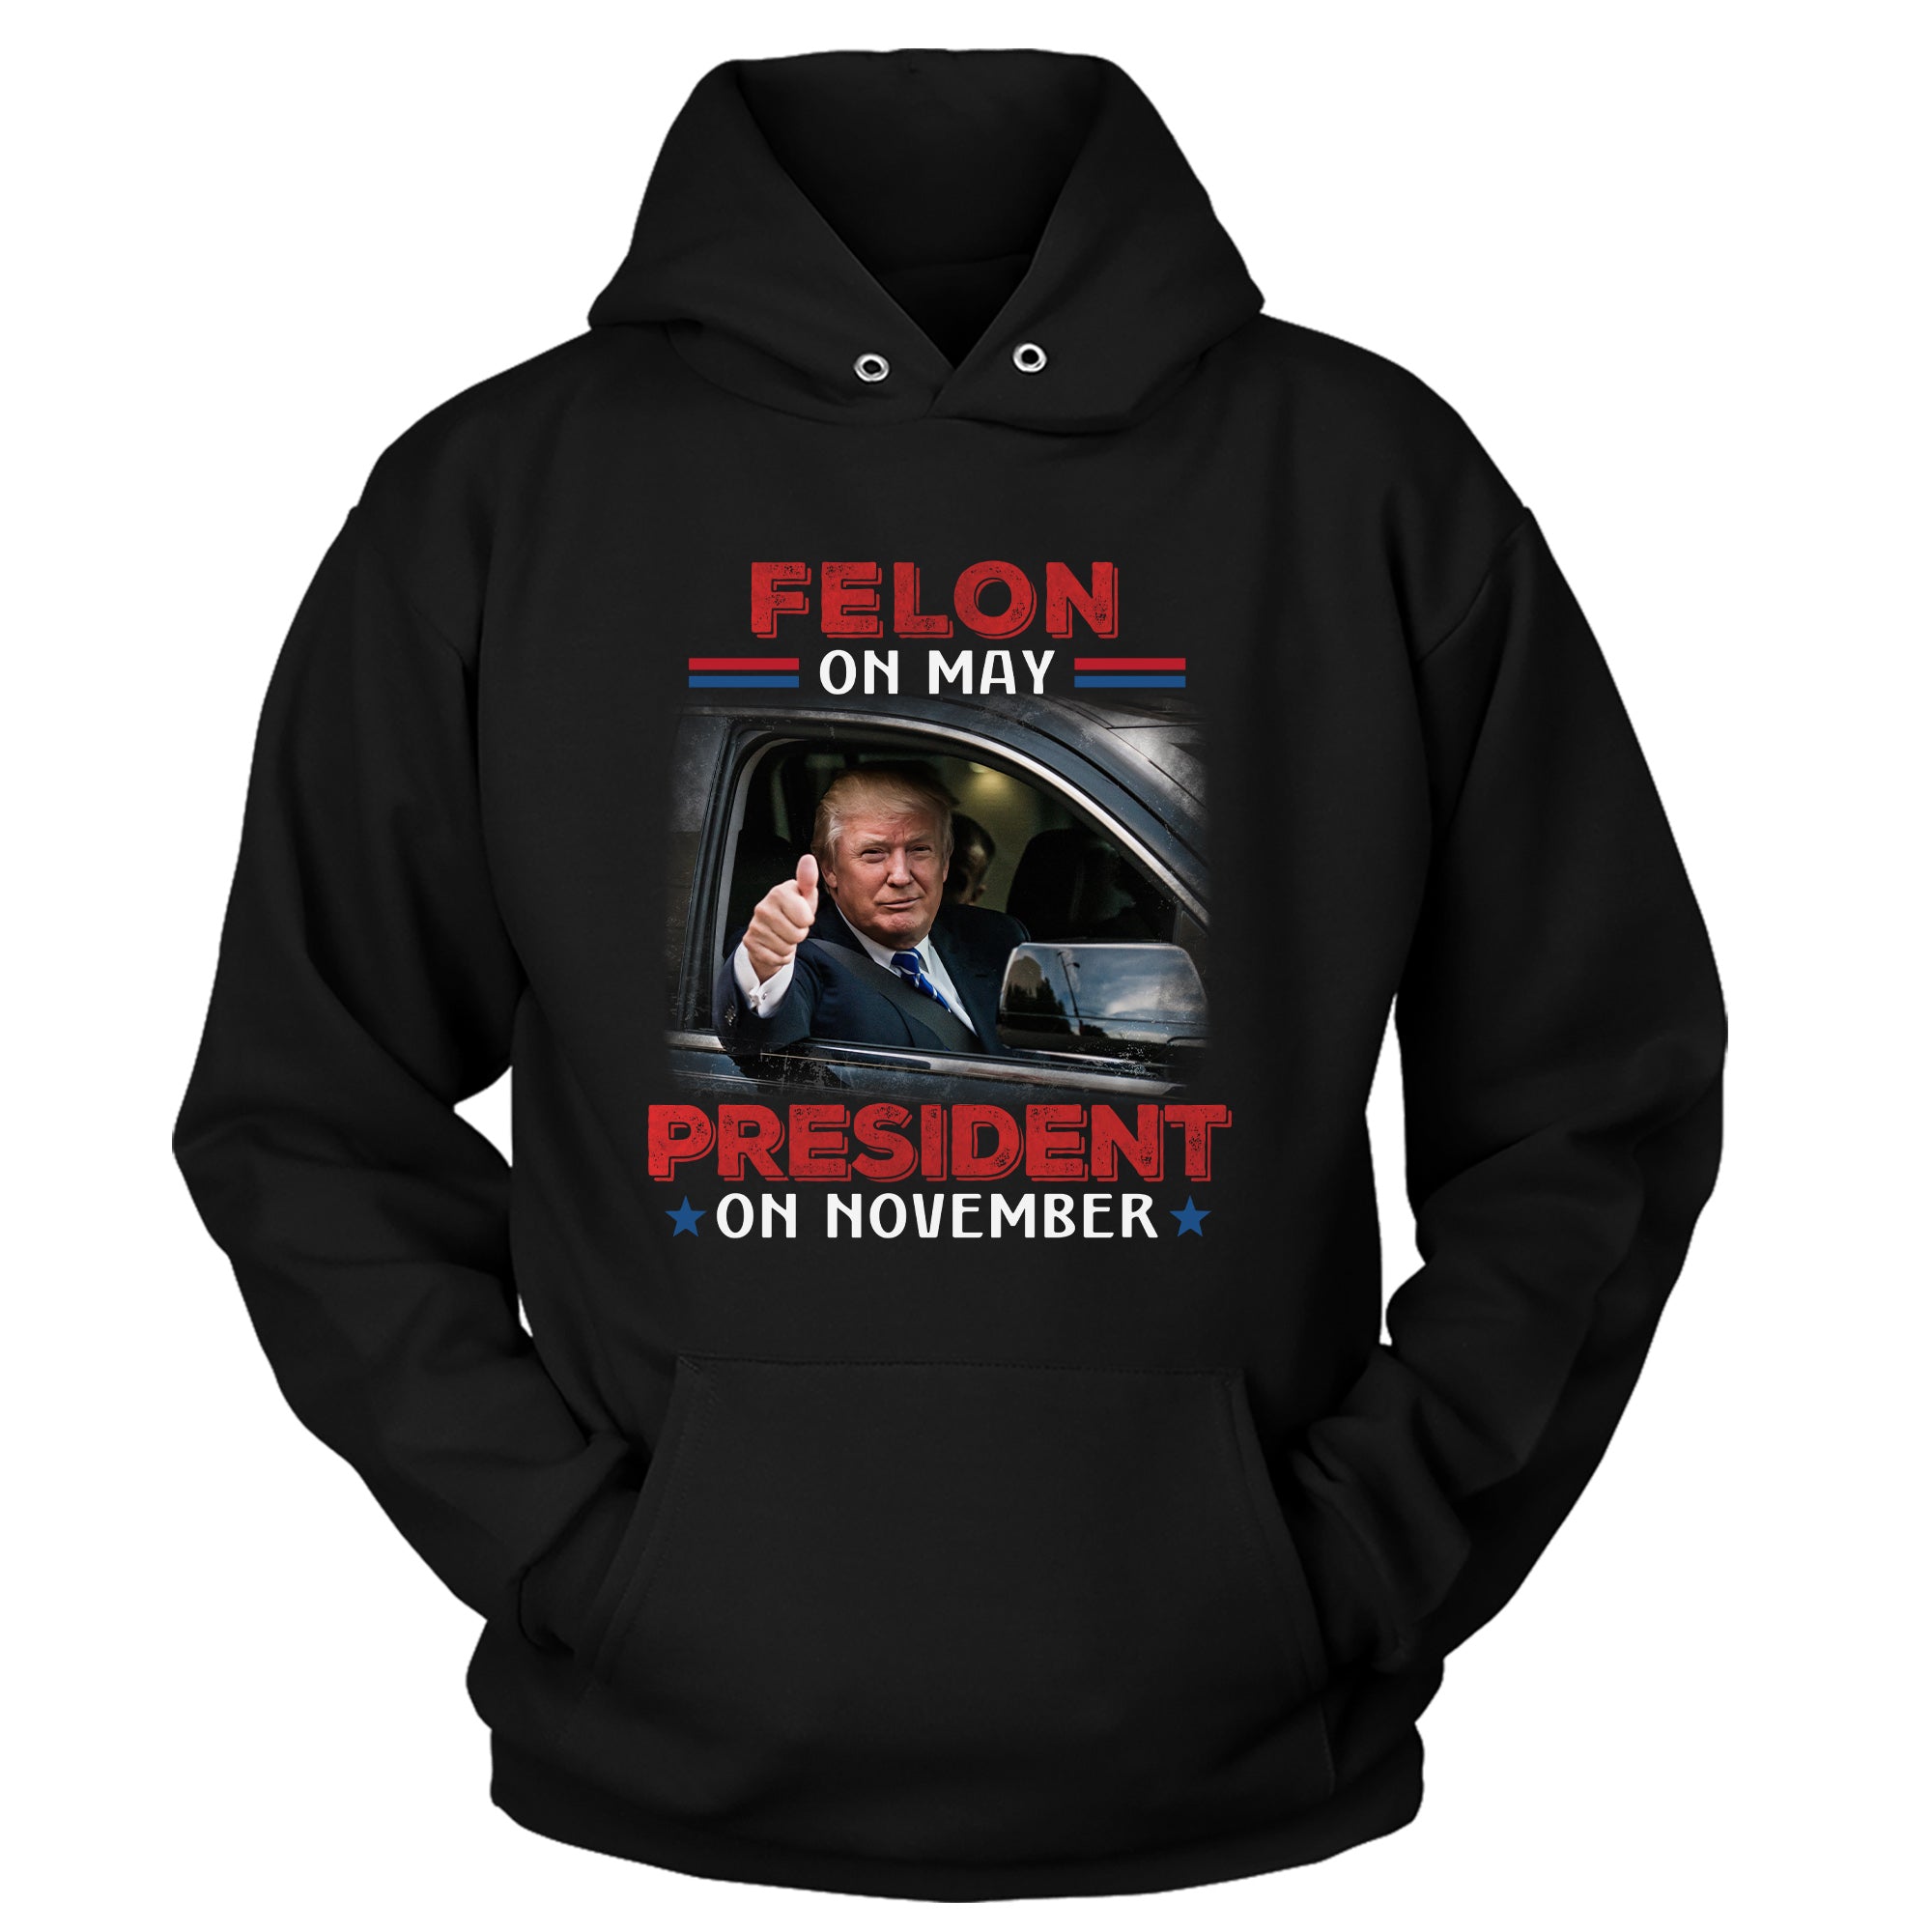 Felon On May, President On November T-Shirt - GB70